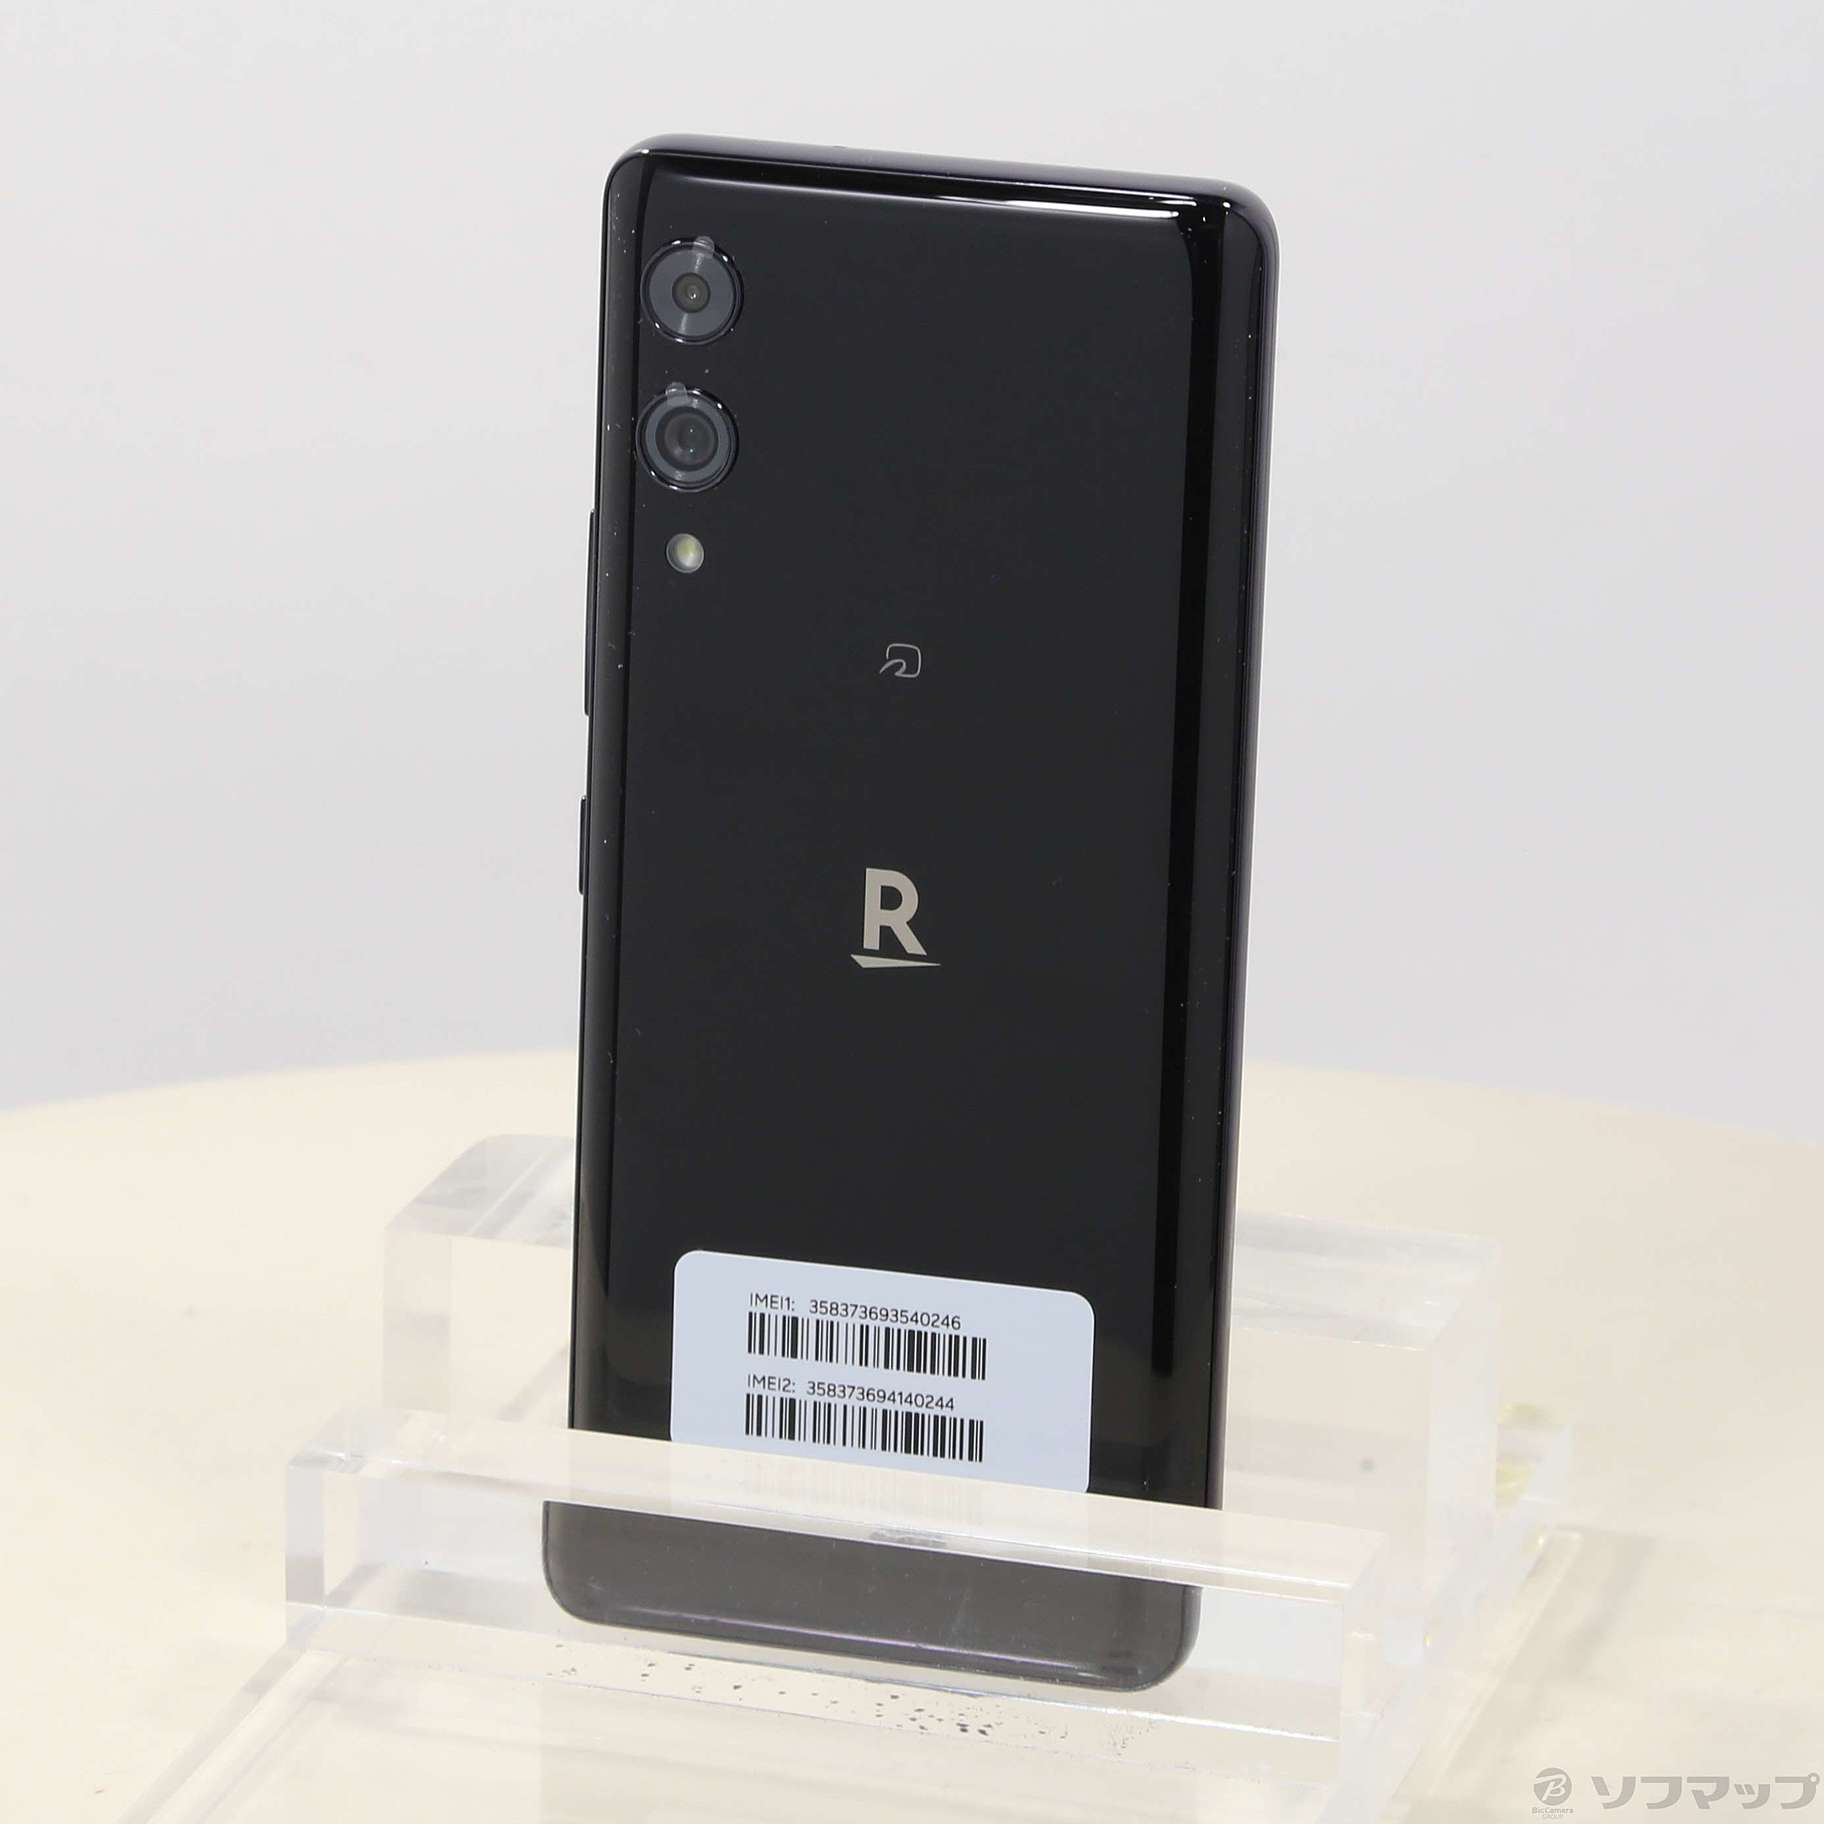 Rakuten Hand 5G ブラック 128 GB その他 - スマートフォン本体